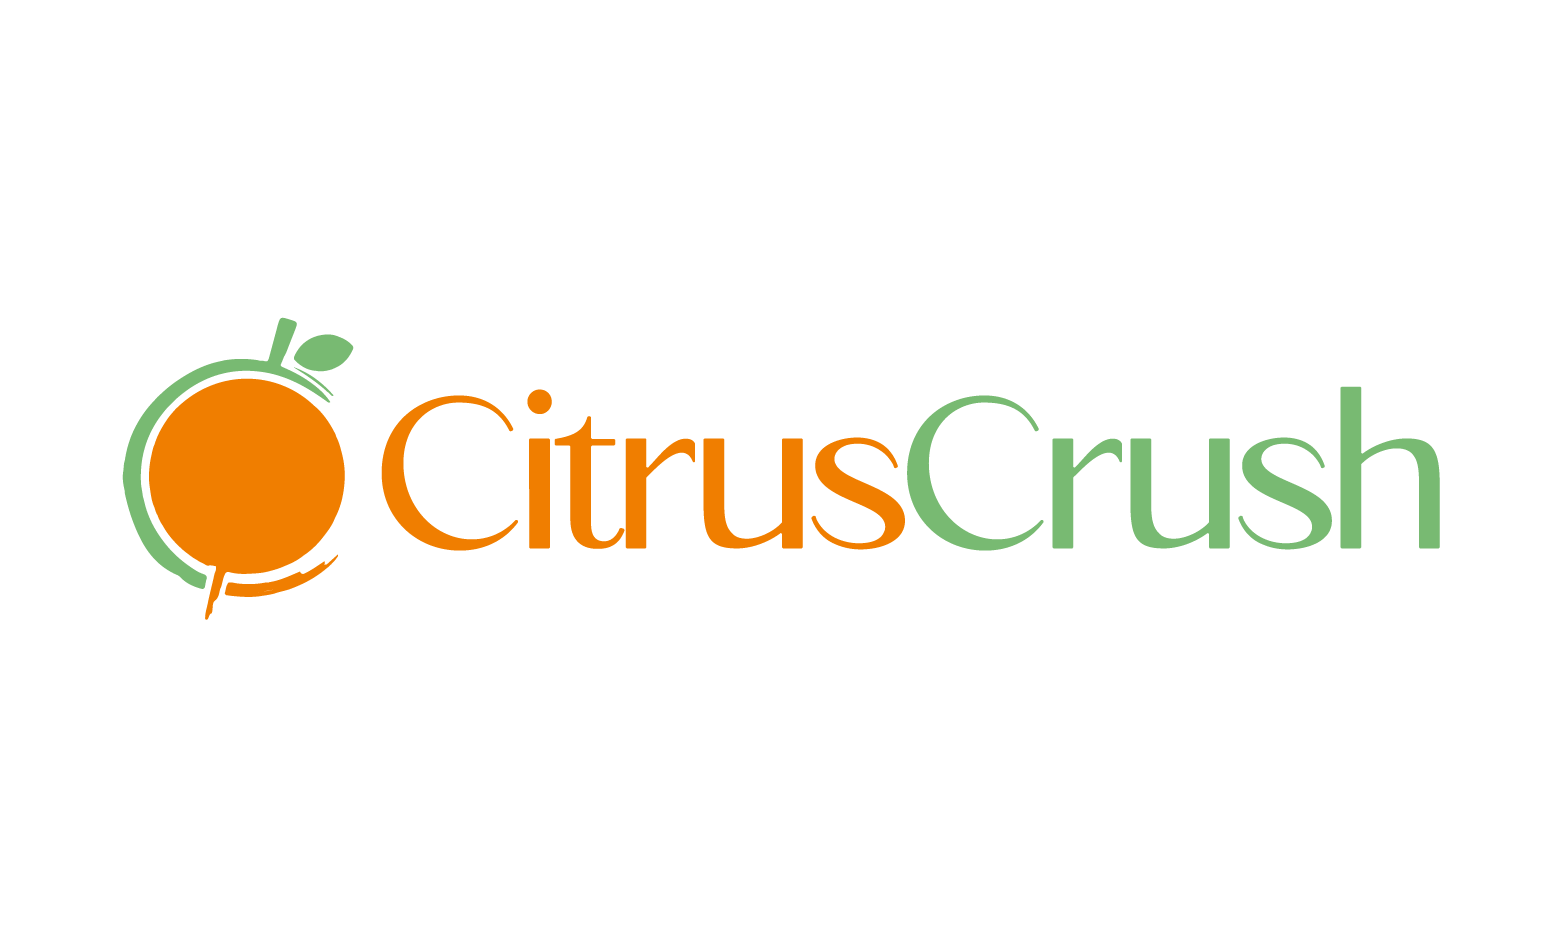 CitrusCrush.com - Creative brandable domain for sale